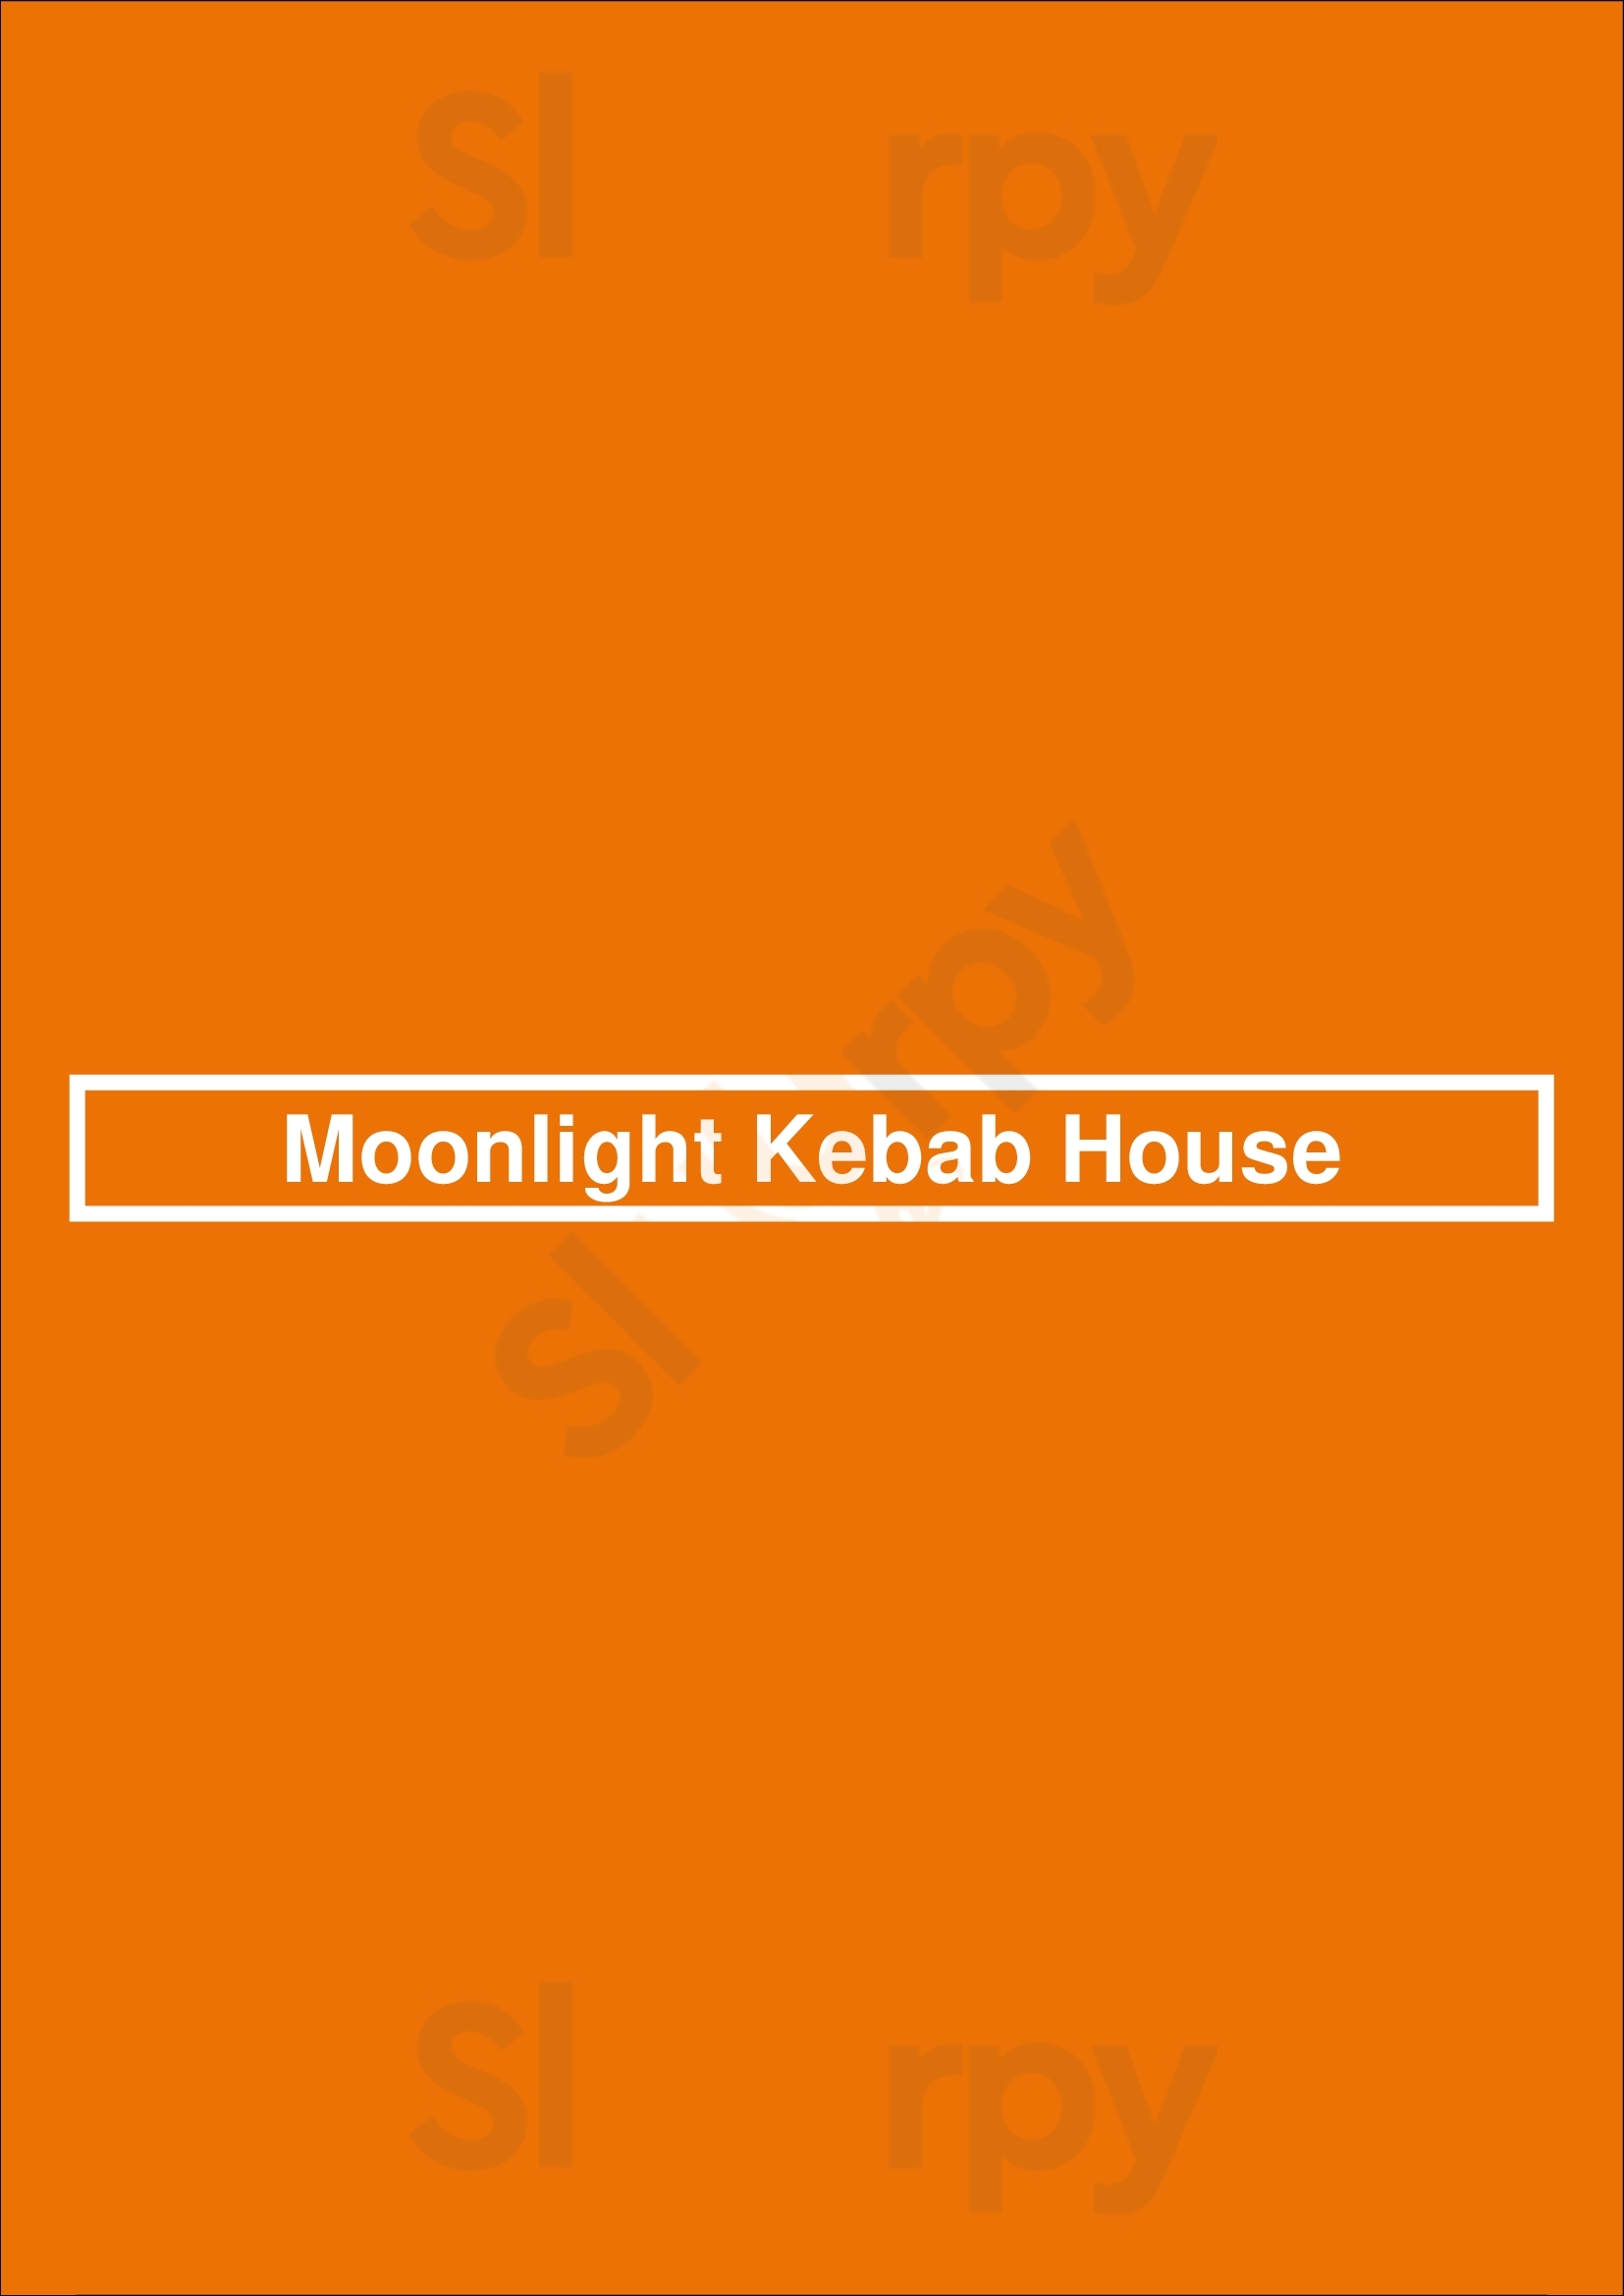 Moonlight Kebab House Stoke-on-Trent Menu - 1